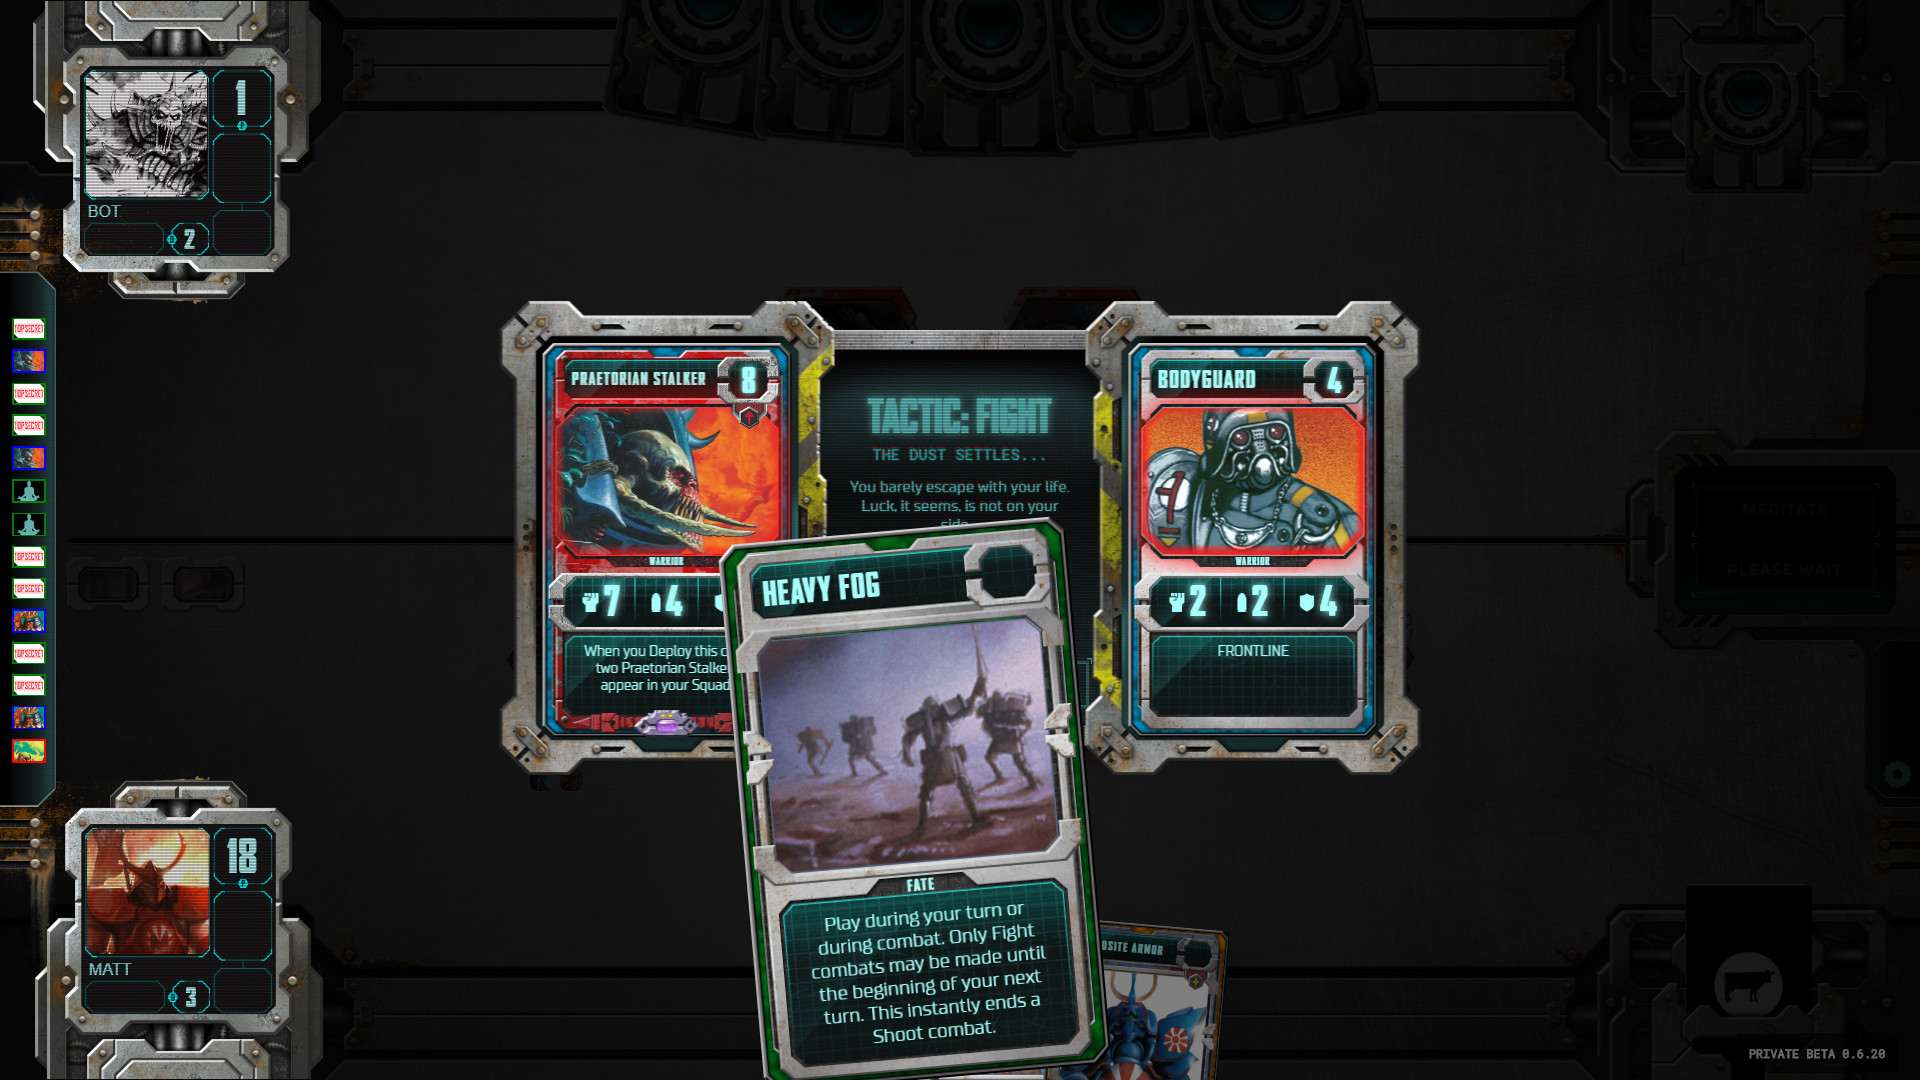 Doomtrooper CCG - Card Pack DLC Steam CD Key